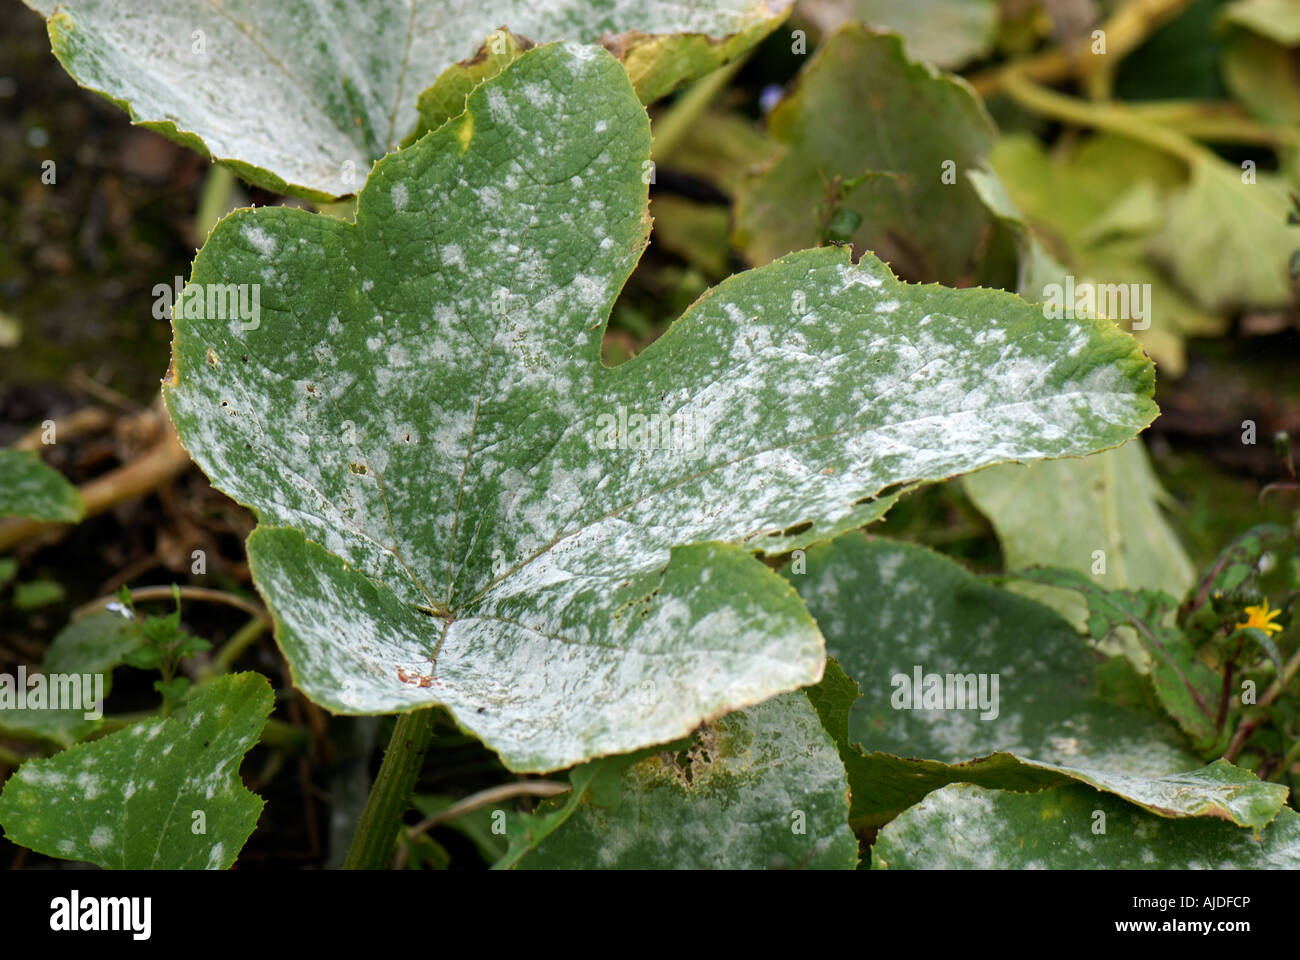 Powdery mildew Sphaerotheca fuliginea infection on pumpkin leaves Stock Photo